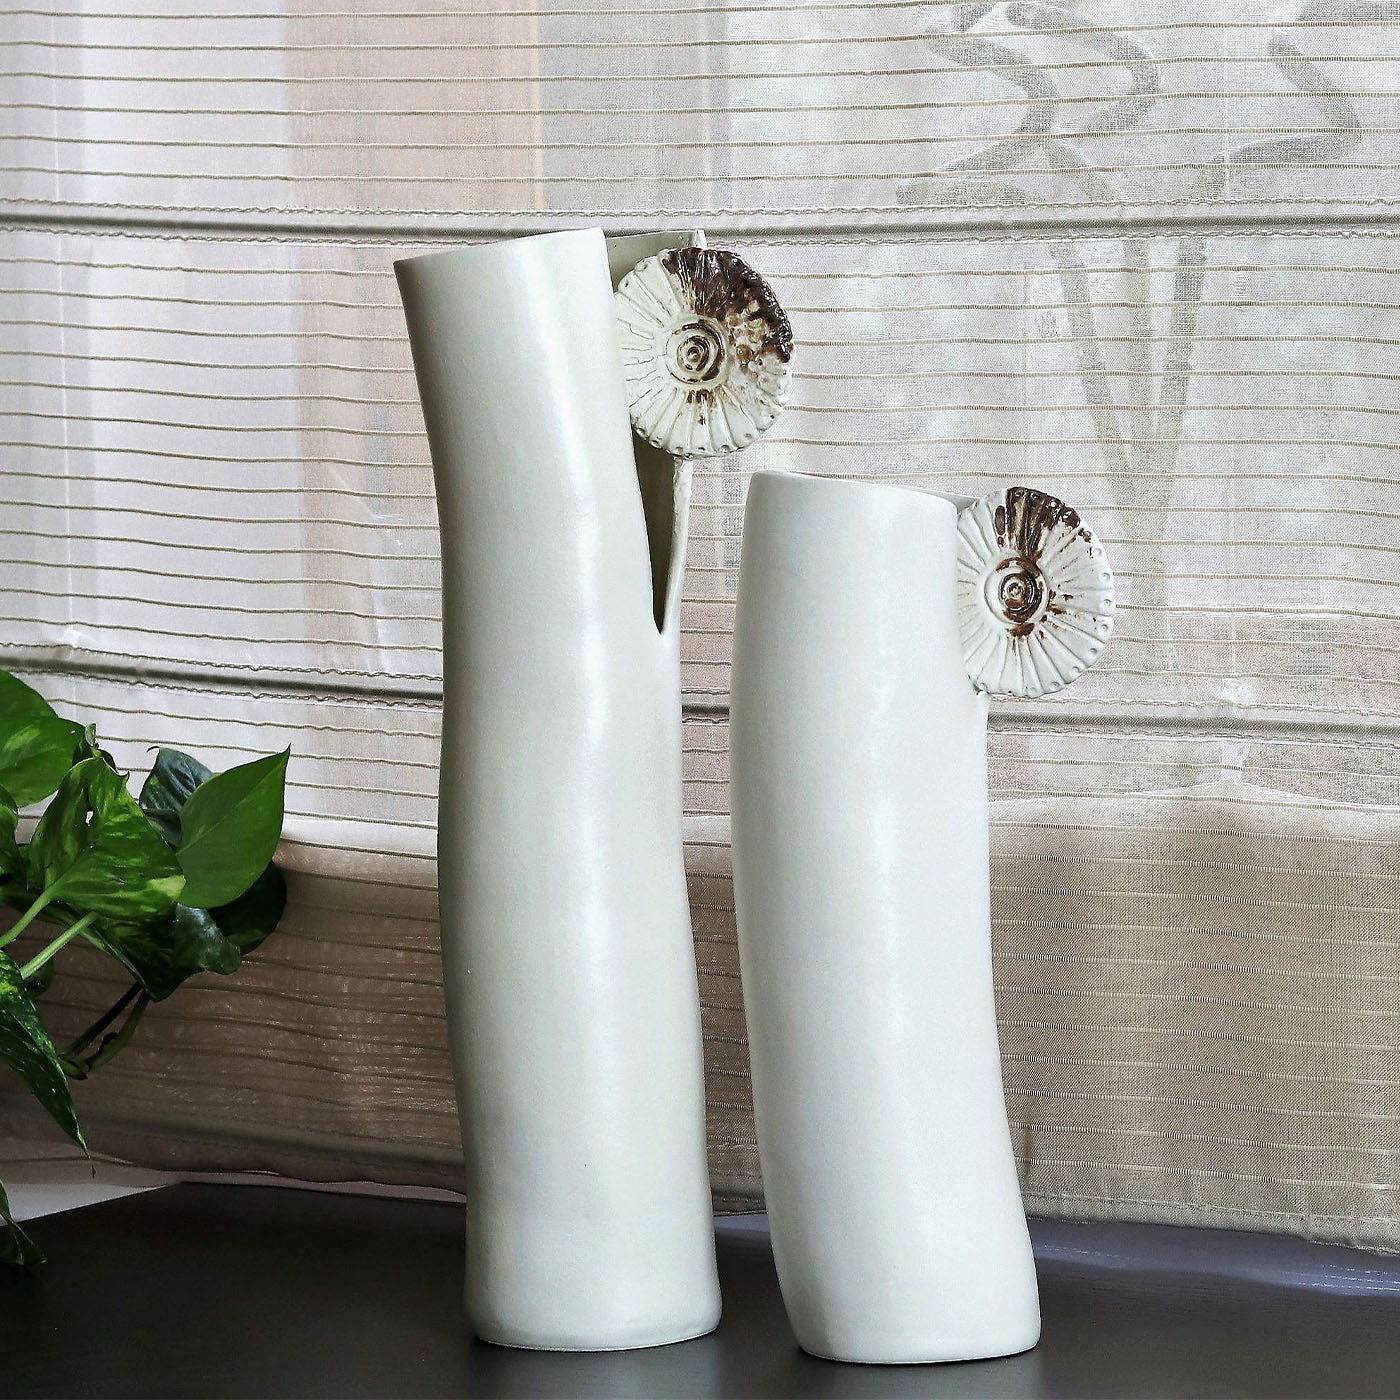 NUR Small White Vase - Alternative view 3